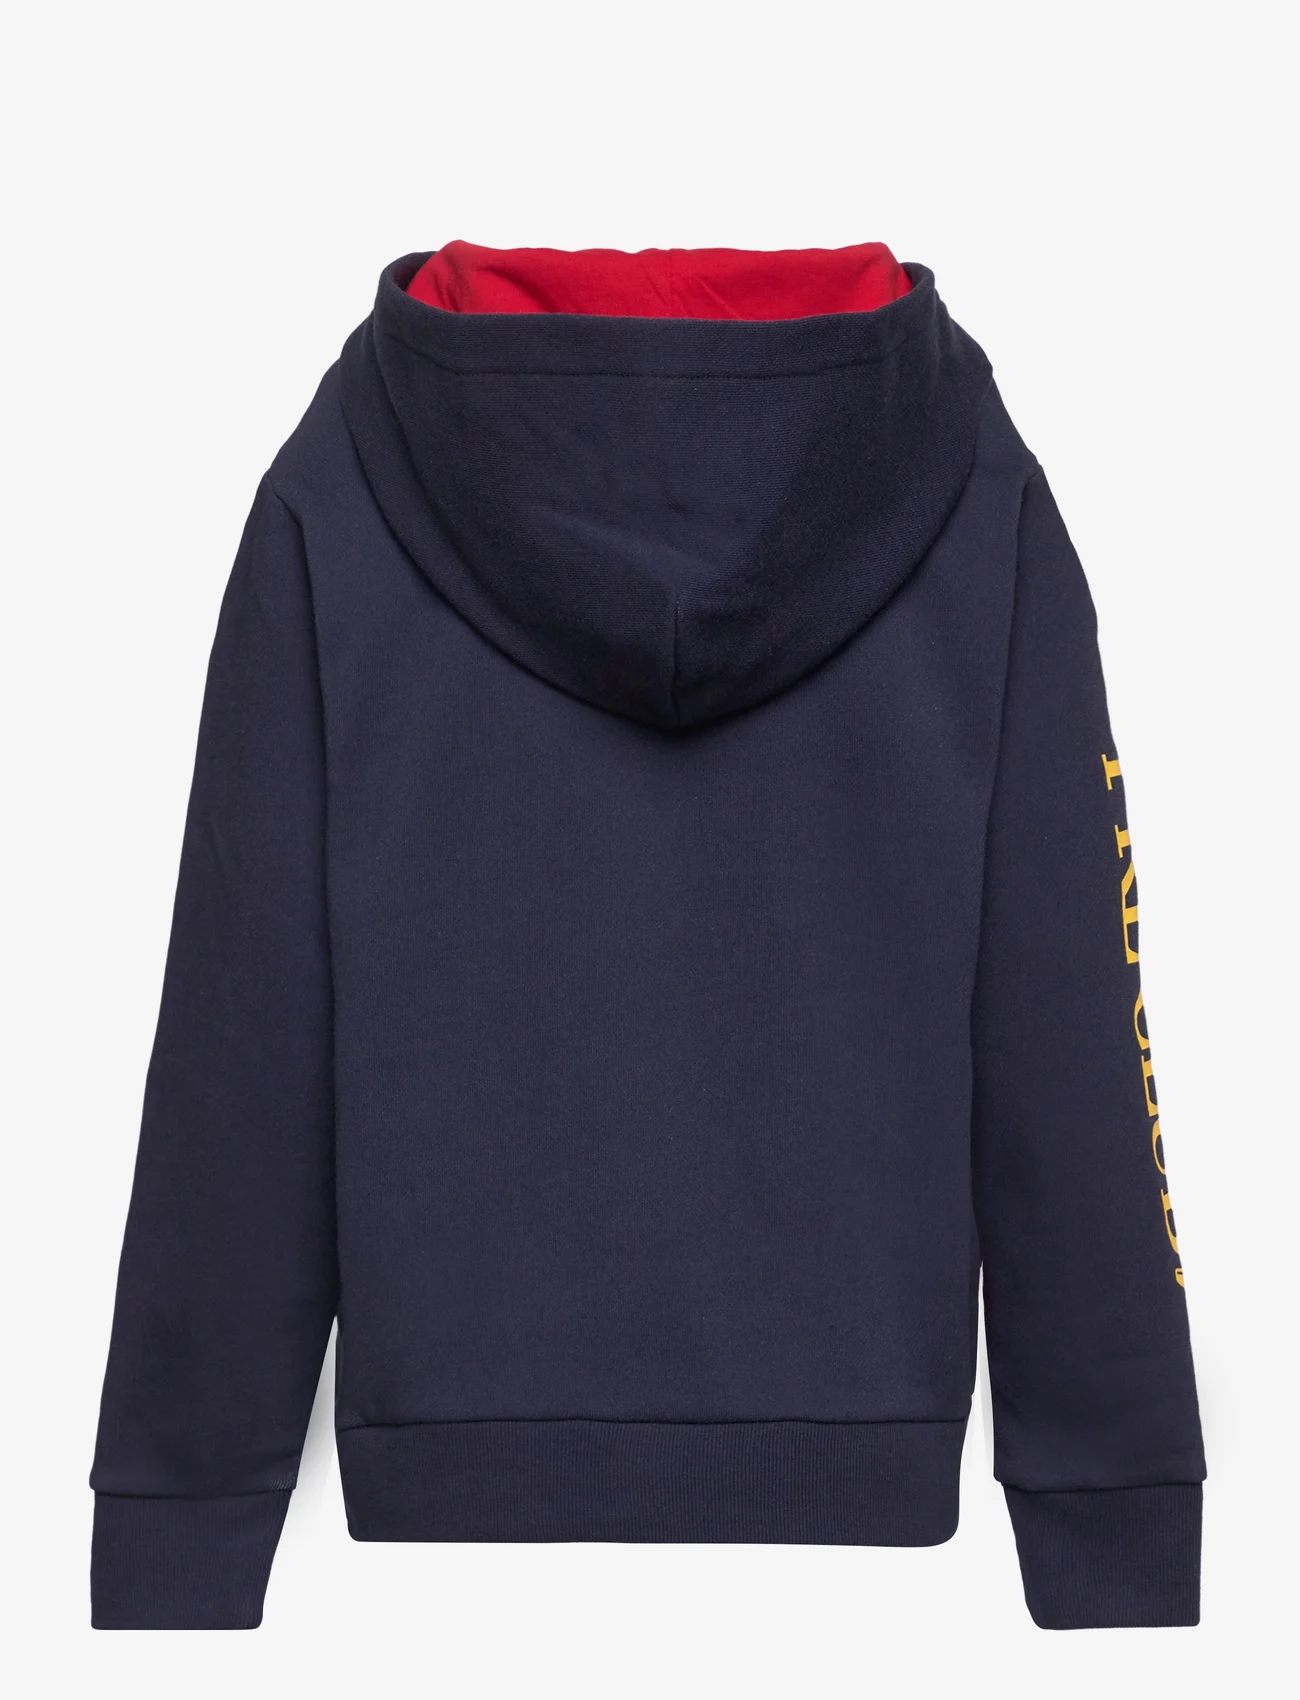 Ralph Lauren Kids - Fleece Graphic Hoodie - džemperiai su gobtuvu - newport navy mult - 1